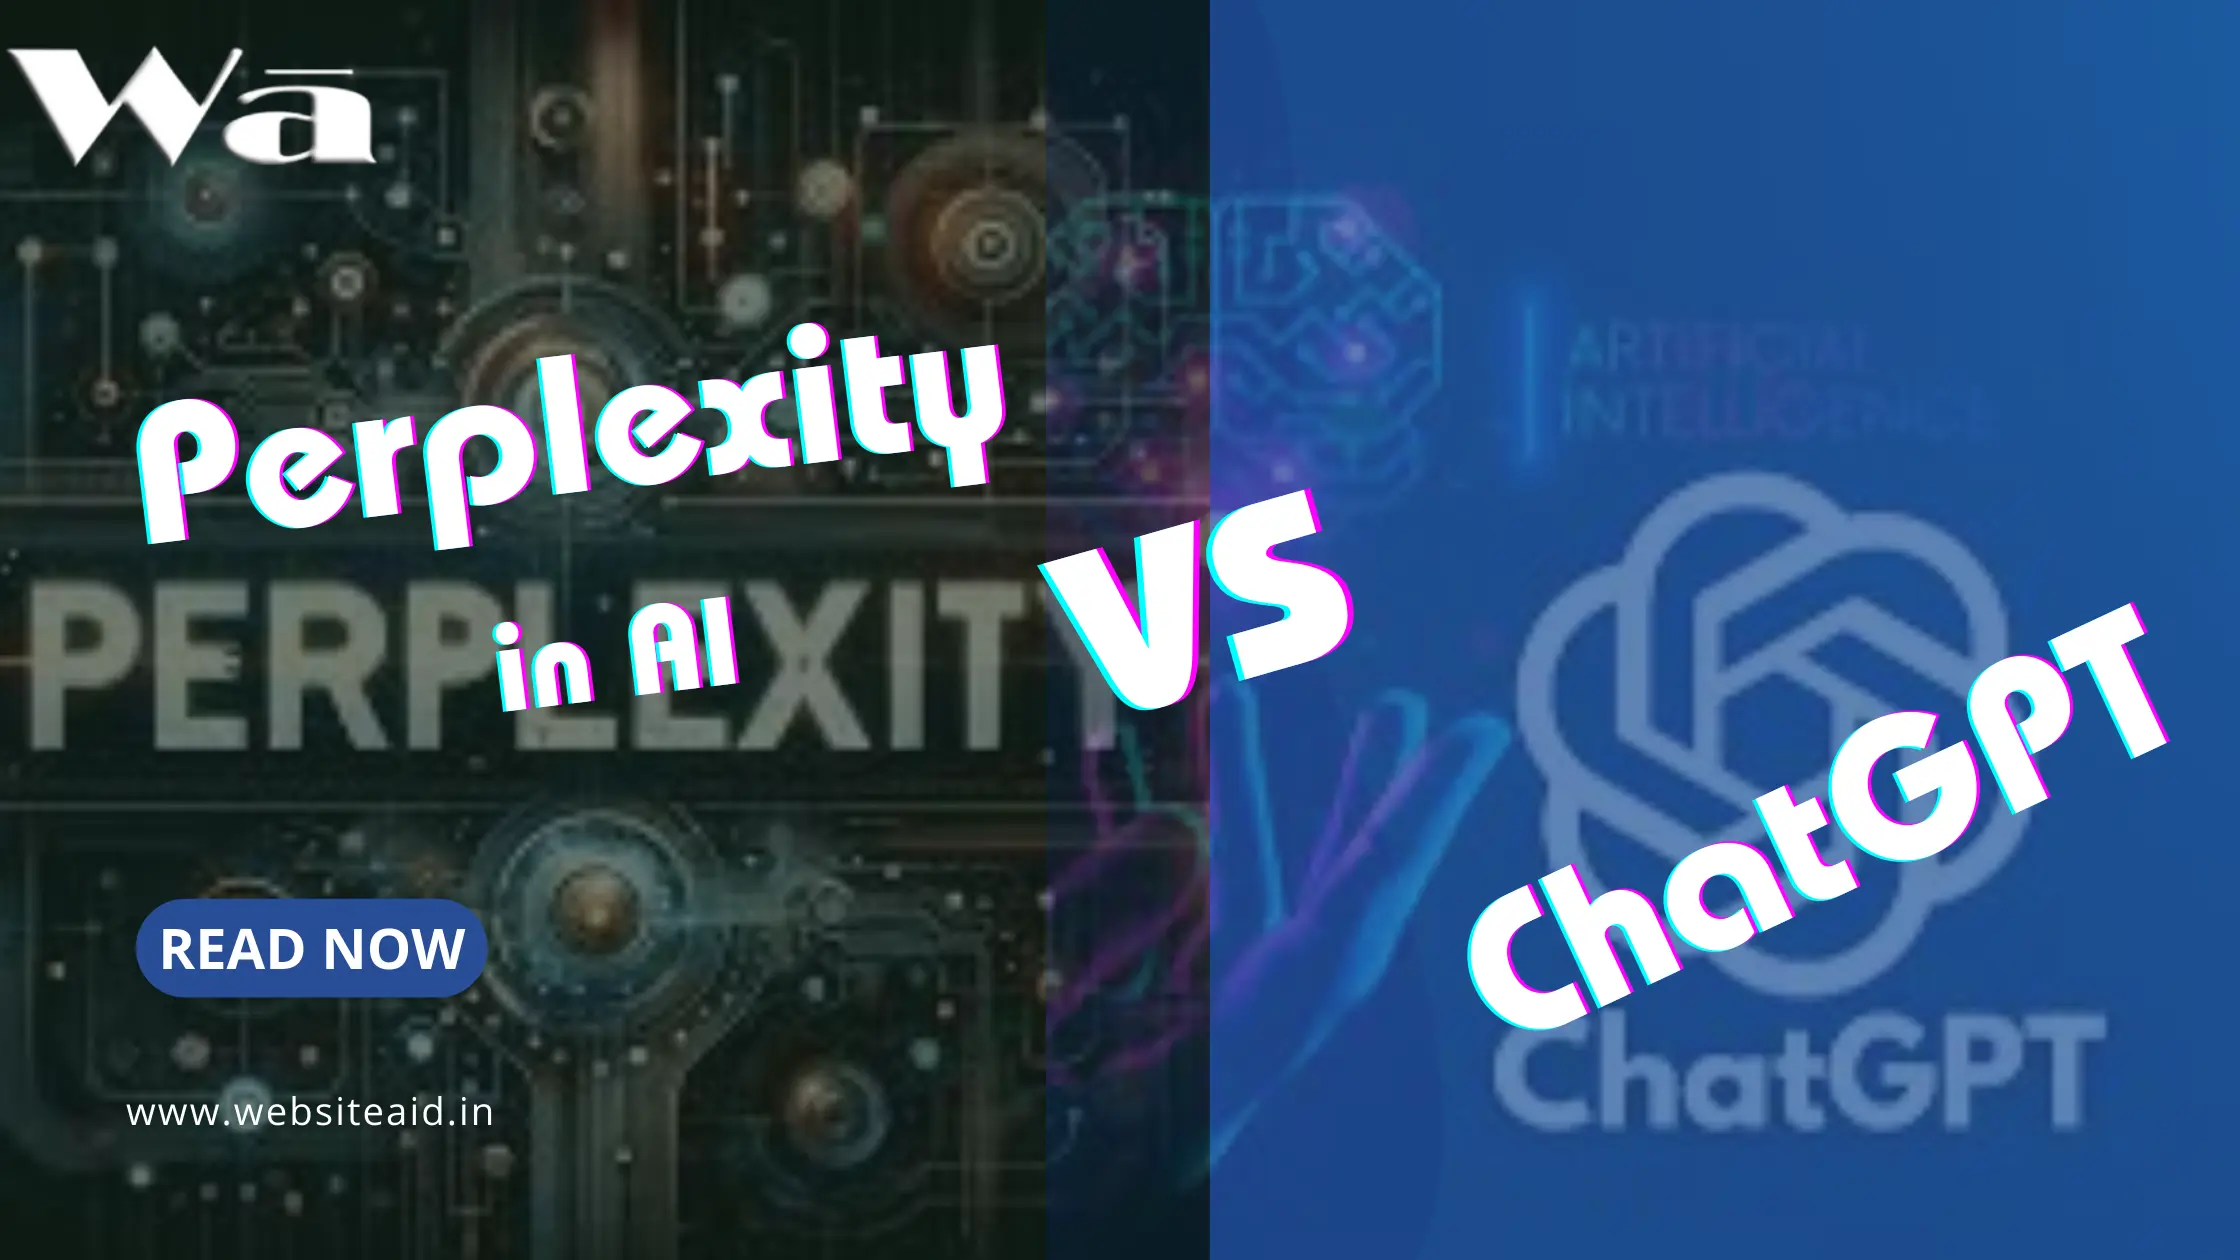 Perplexity in AI vs ChatGPT